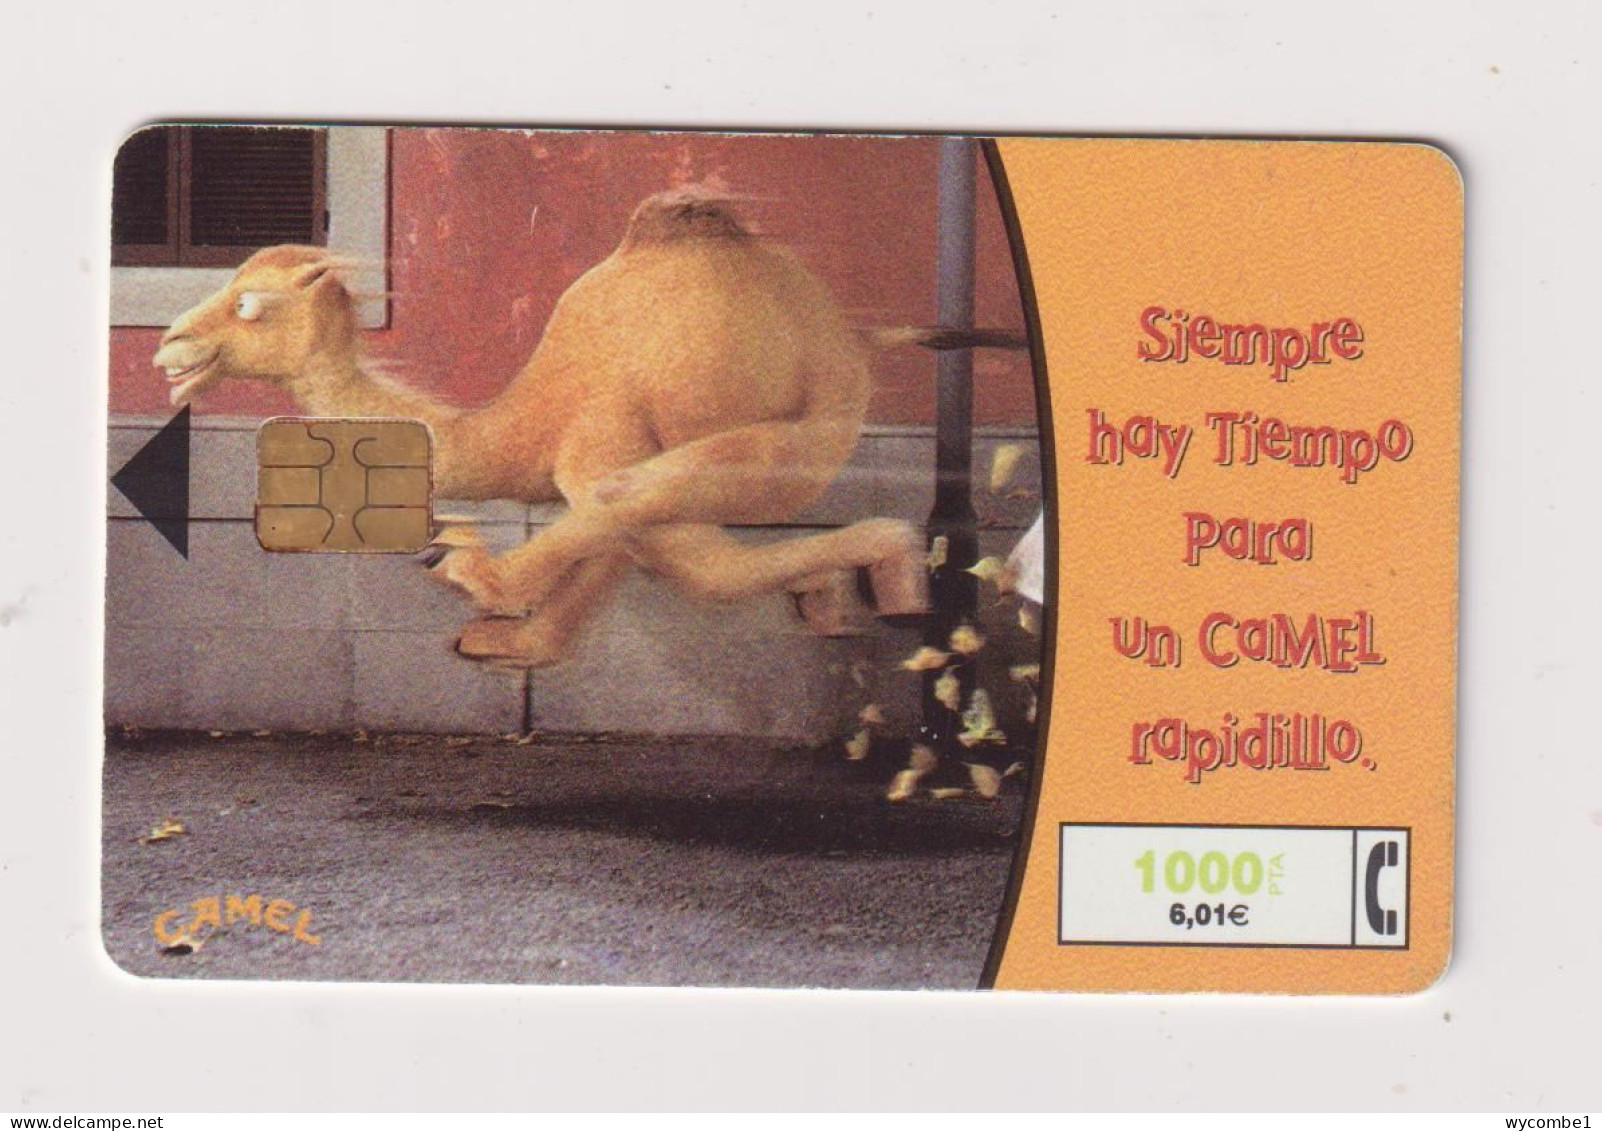 SPAIN - Camel Chip Phonecard - Commemorative Advertisment